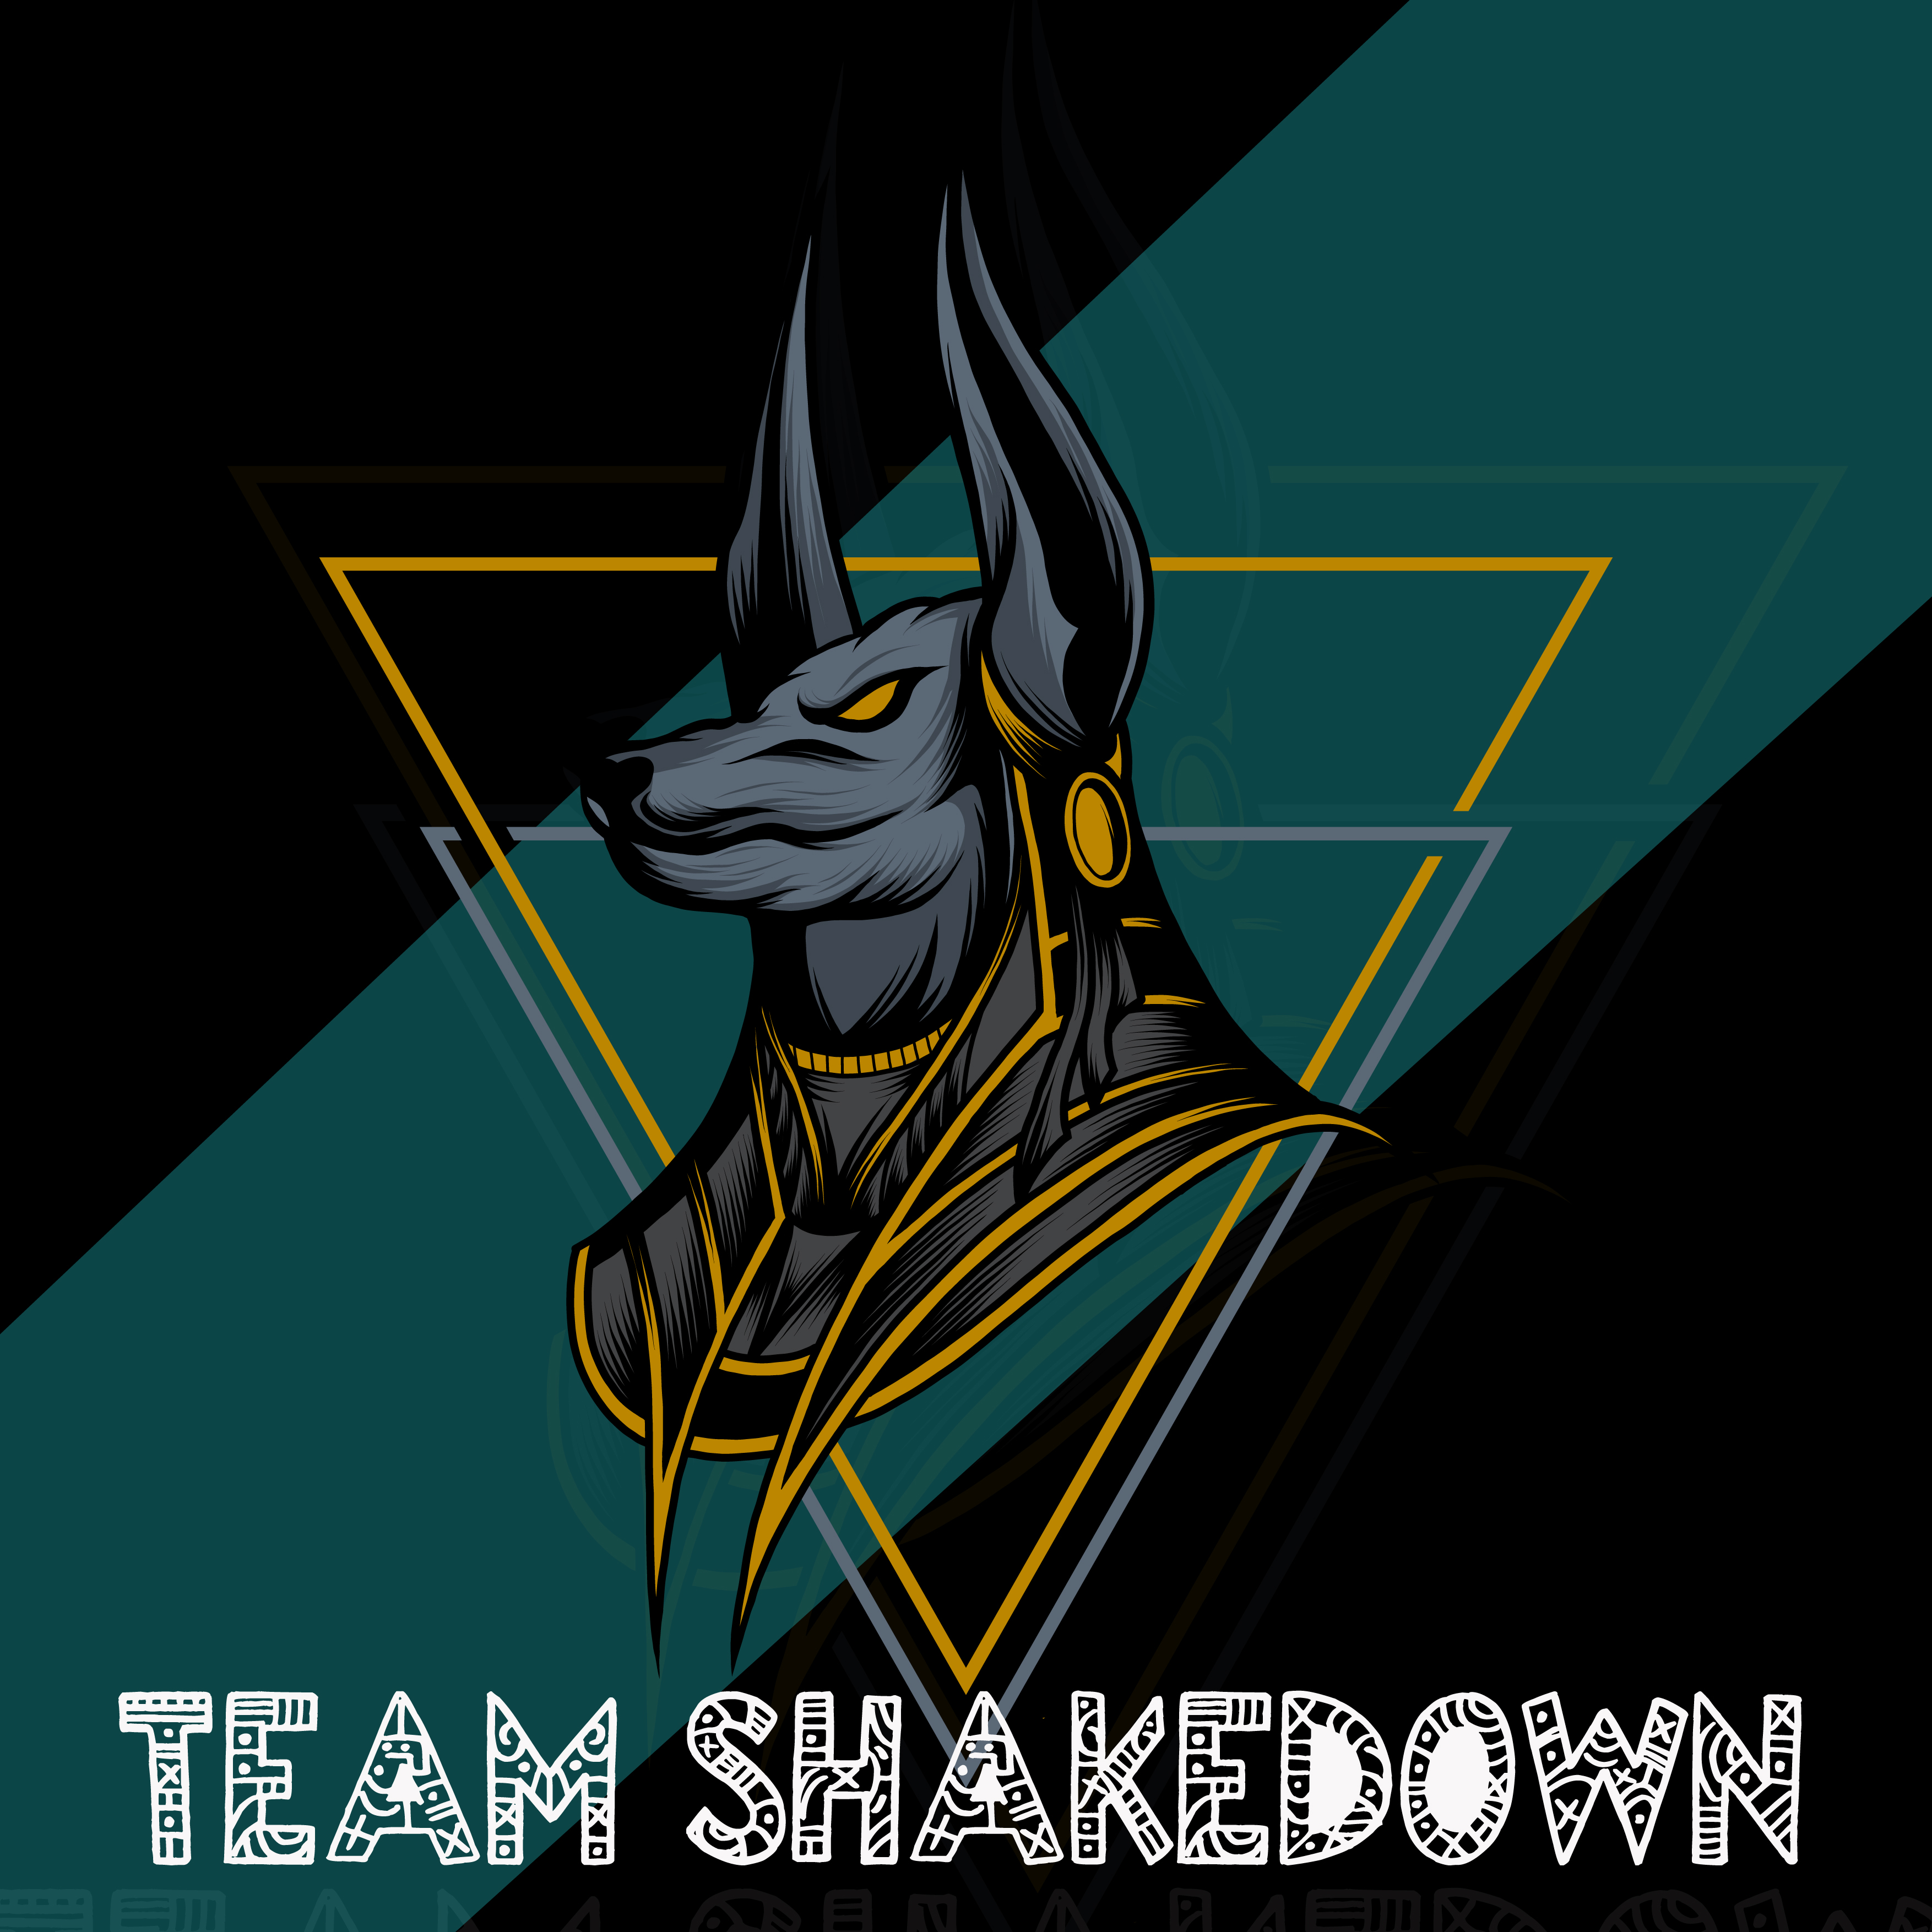 Team Shakedown